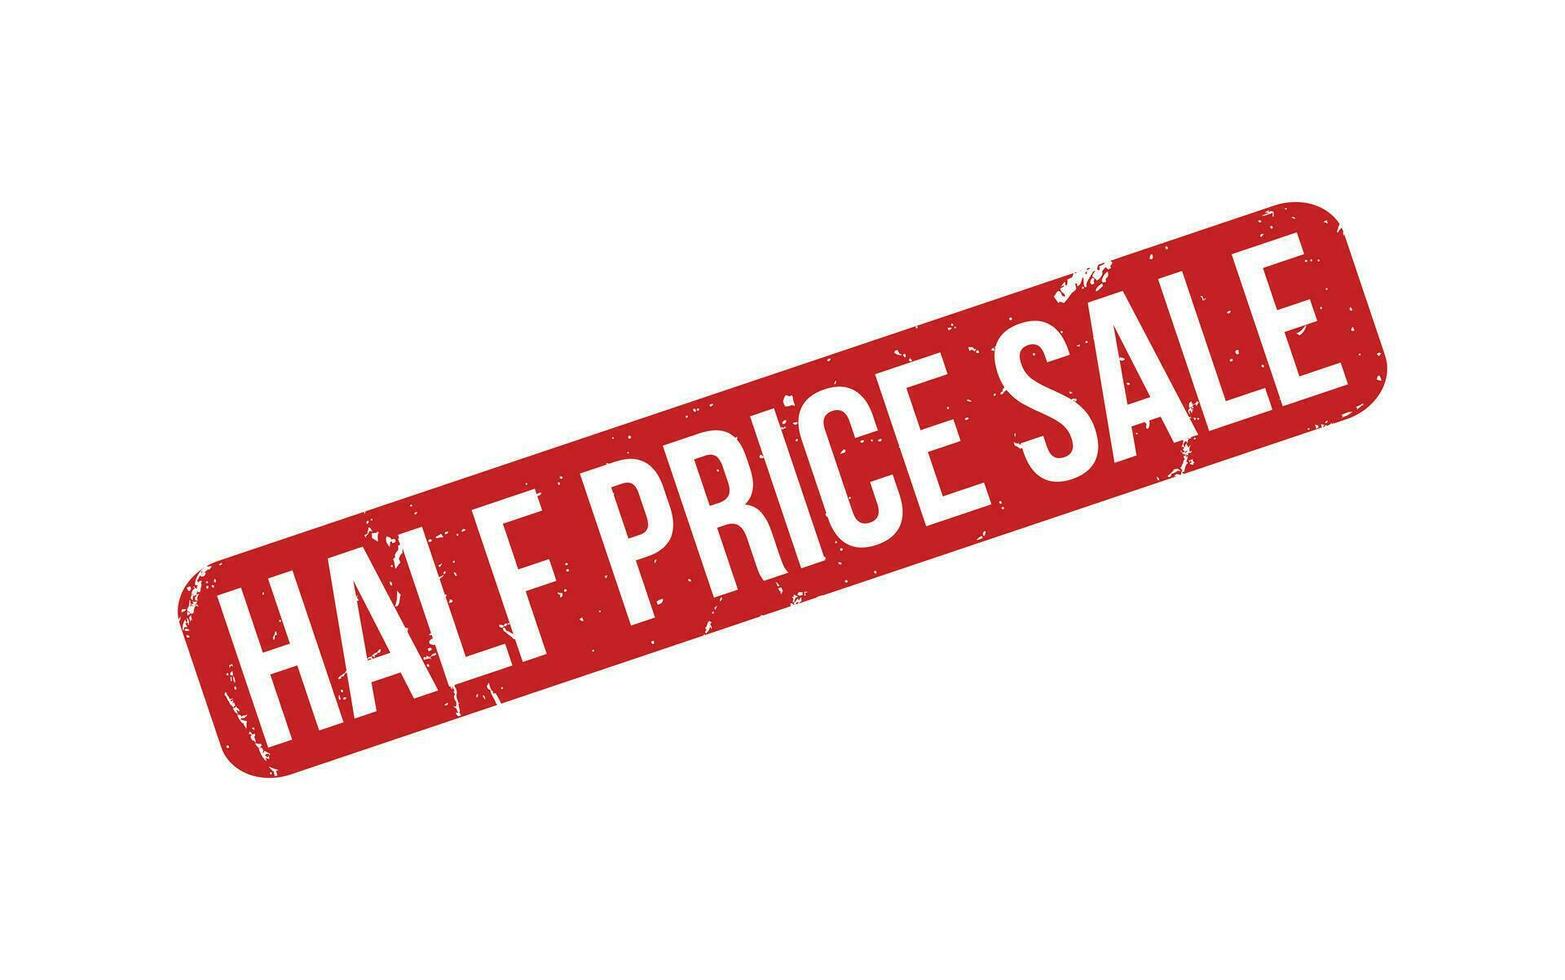 Half Price Sale Rubber Stamp Seal Vector